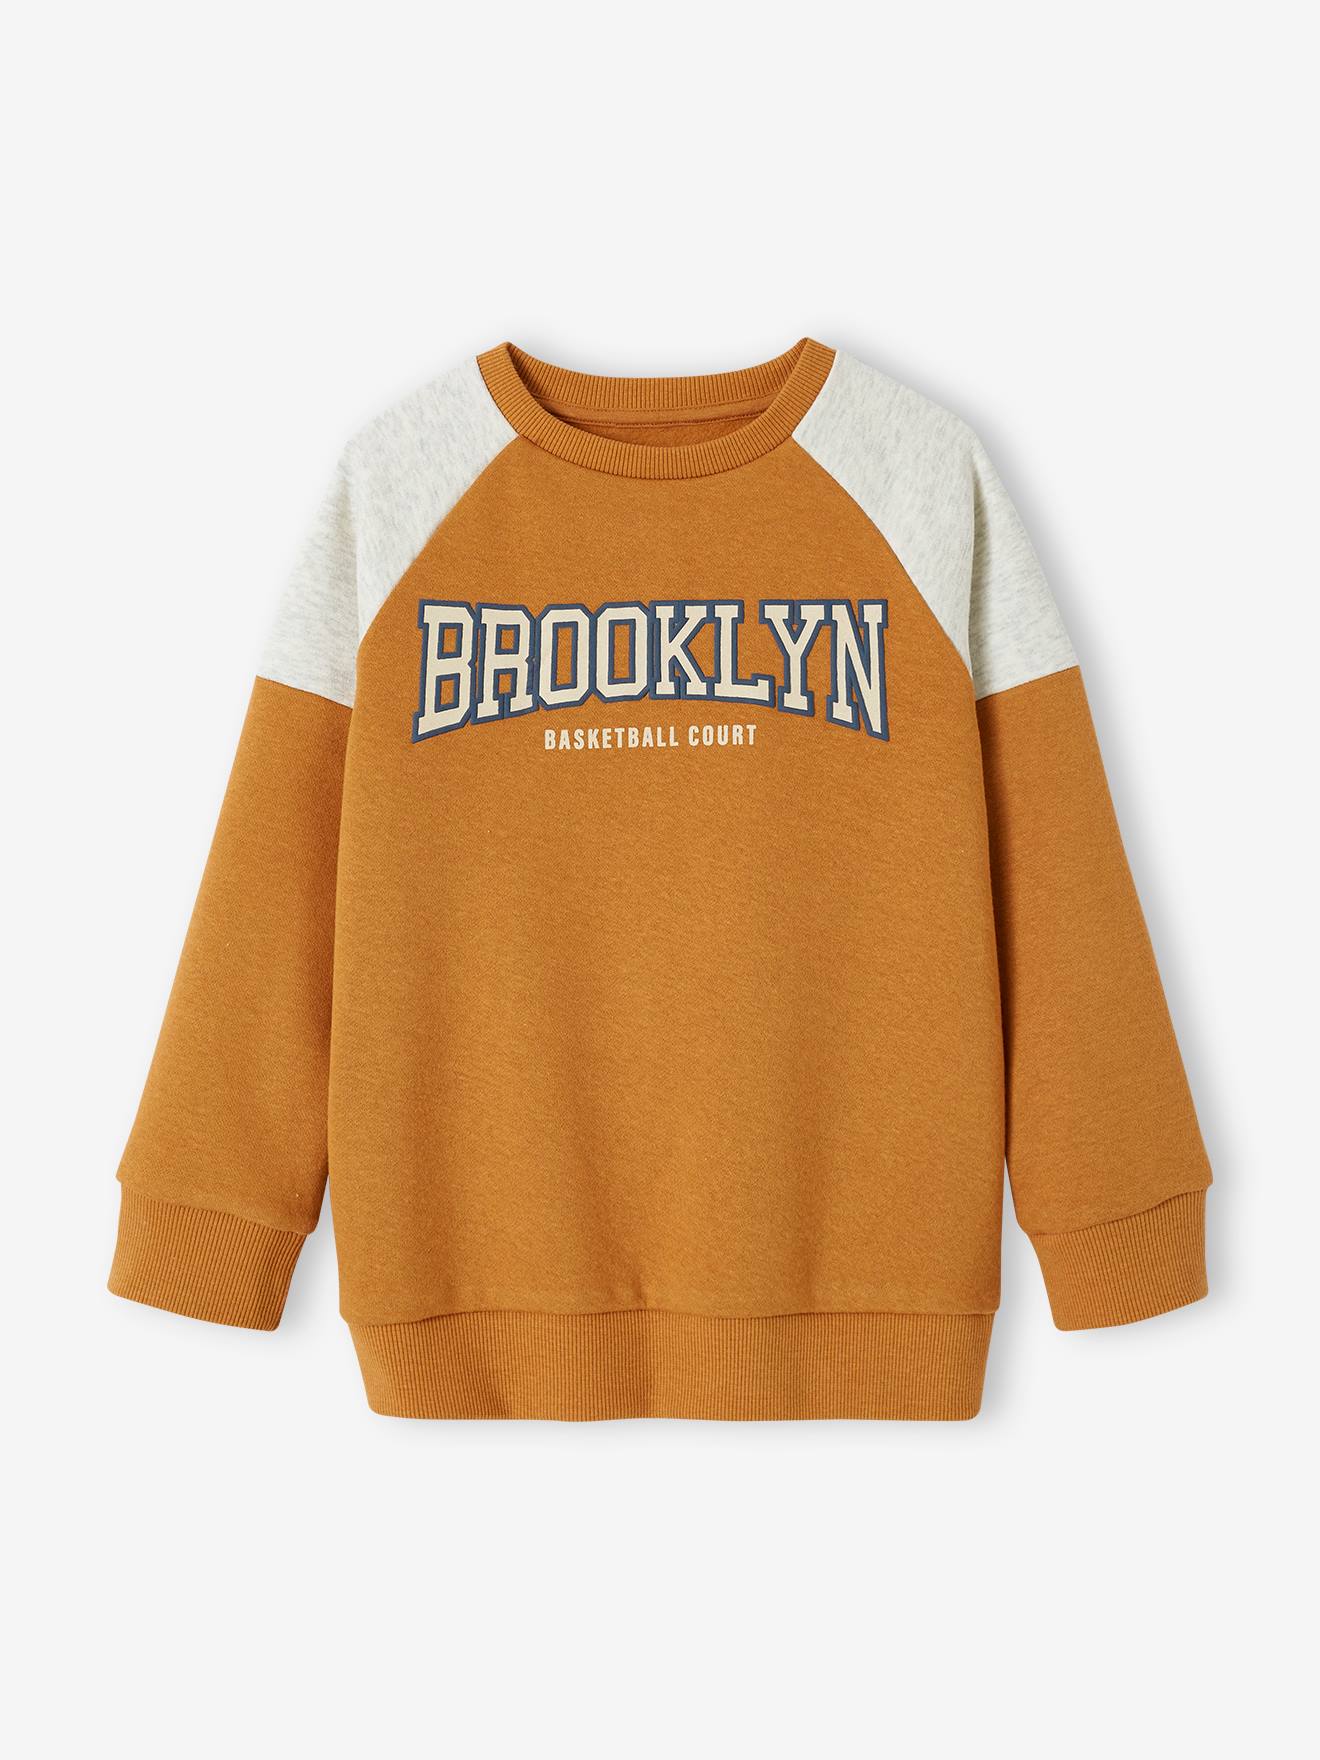 Team Brooklyn Colourblock Sports Sweatshirt for Boys pecan nut